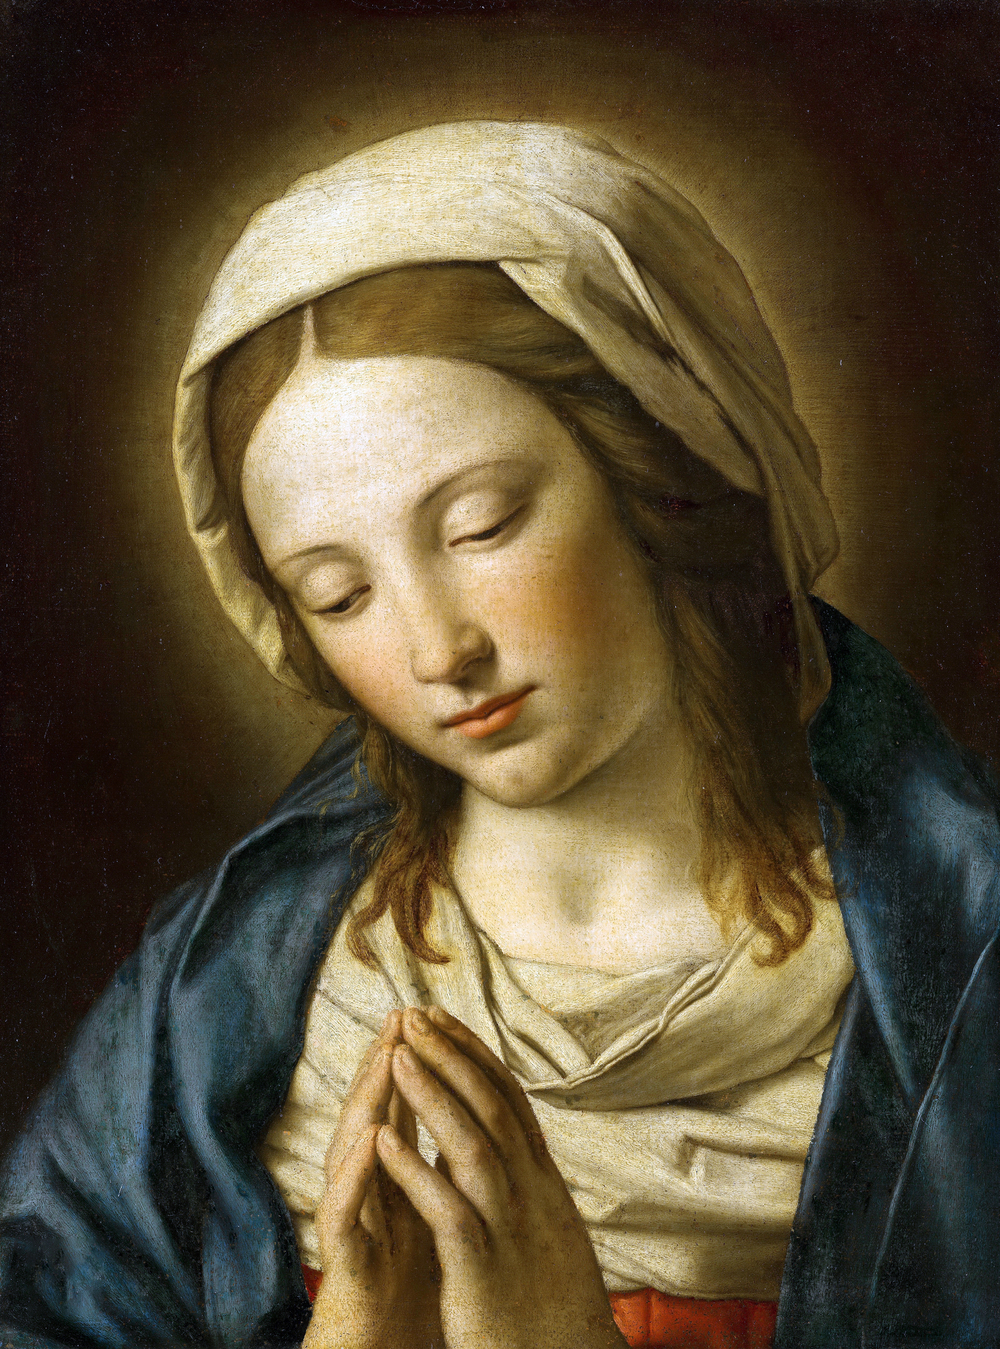 Virgin Mary Praying Hands - HD Wallpaper 